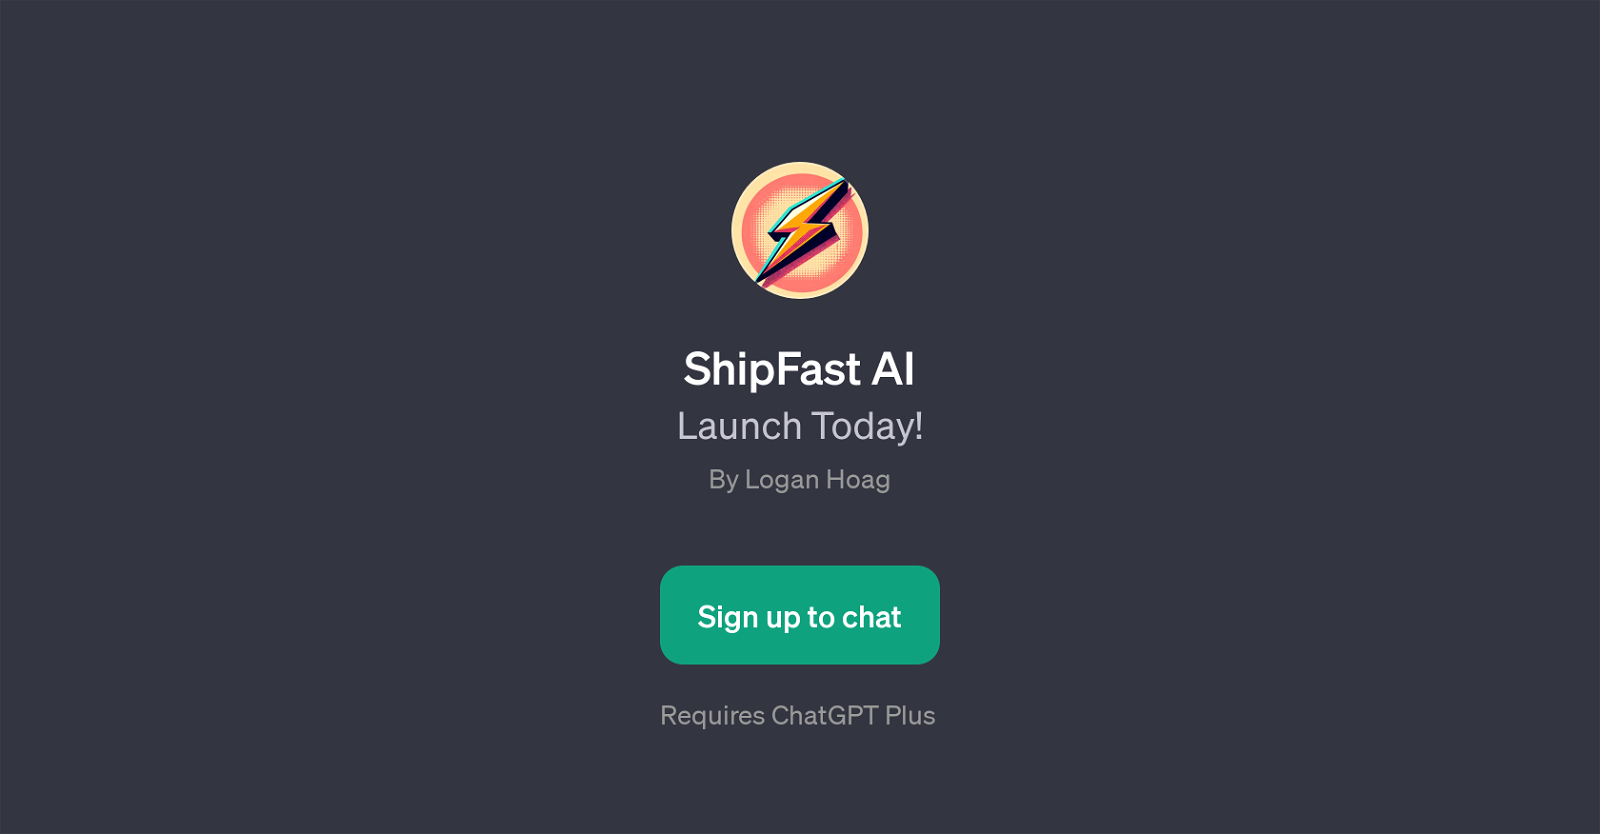 ShipFast AI website